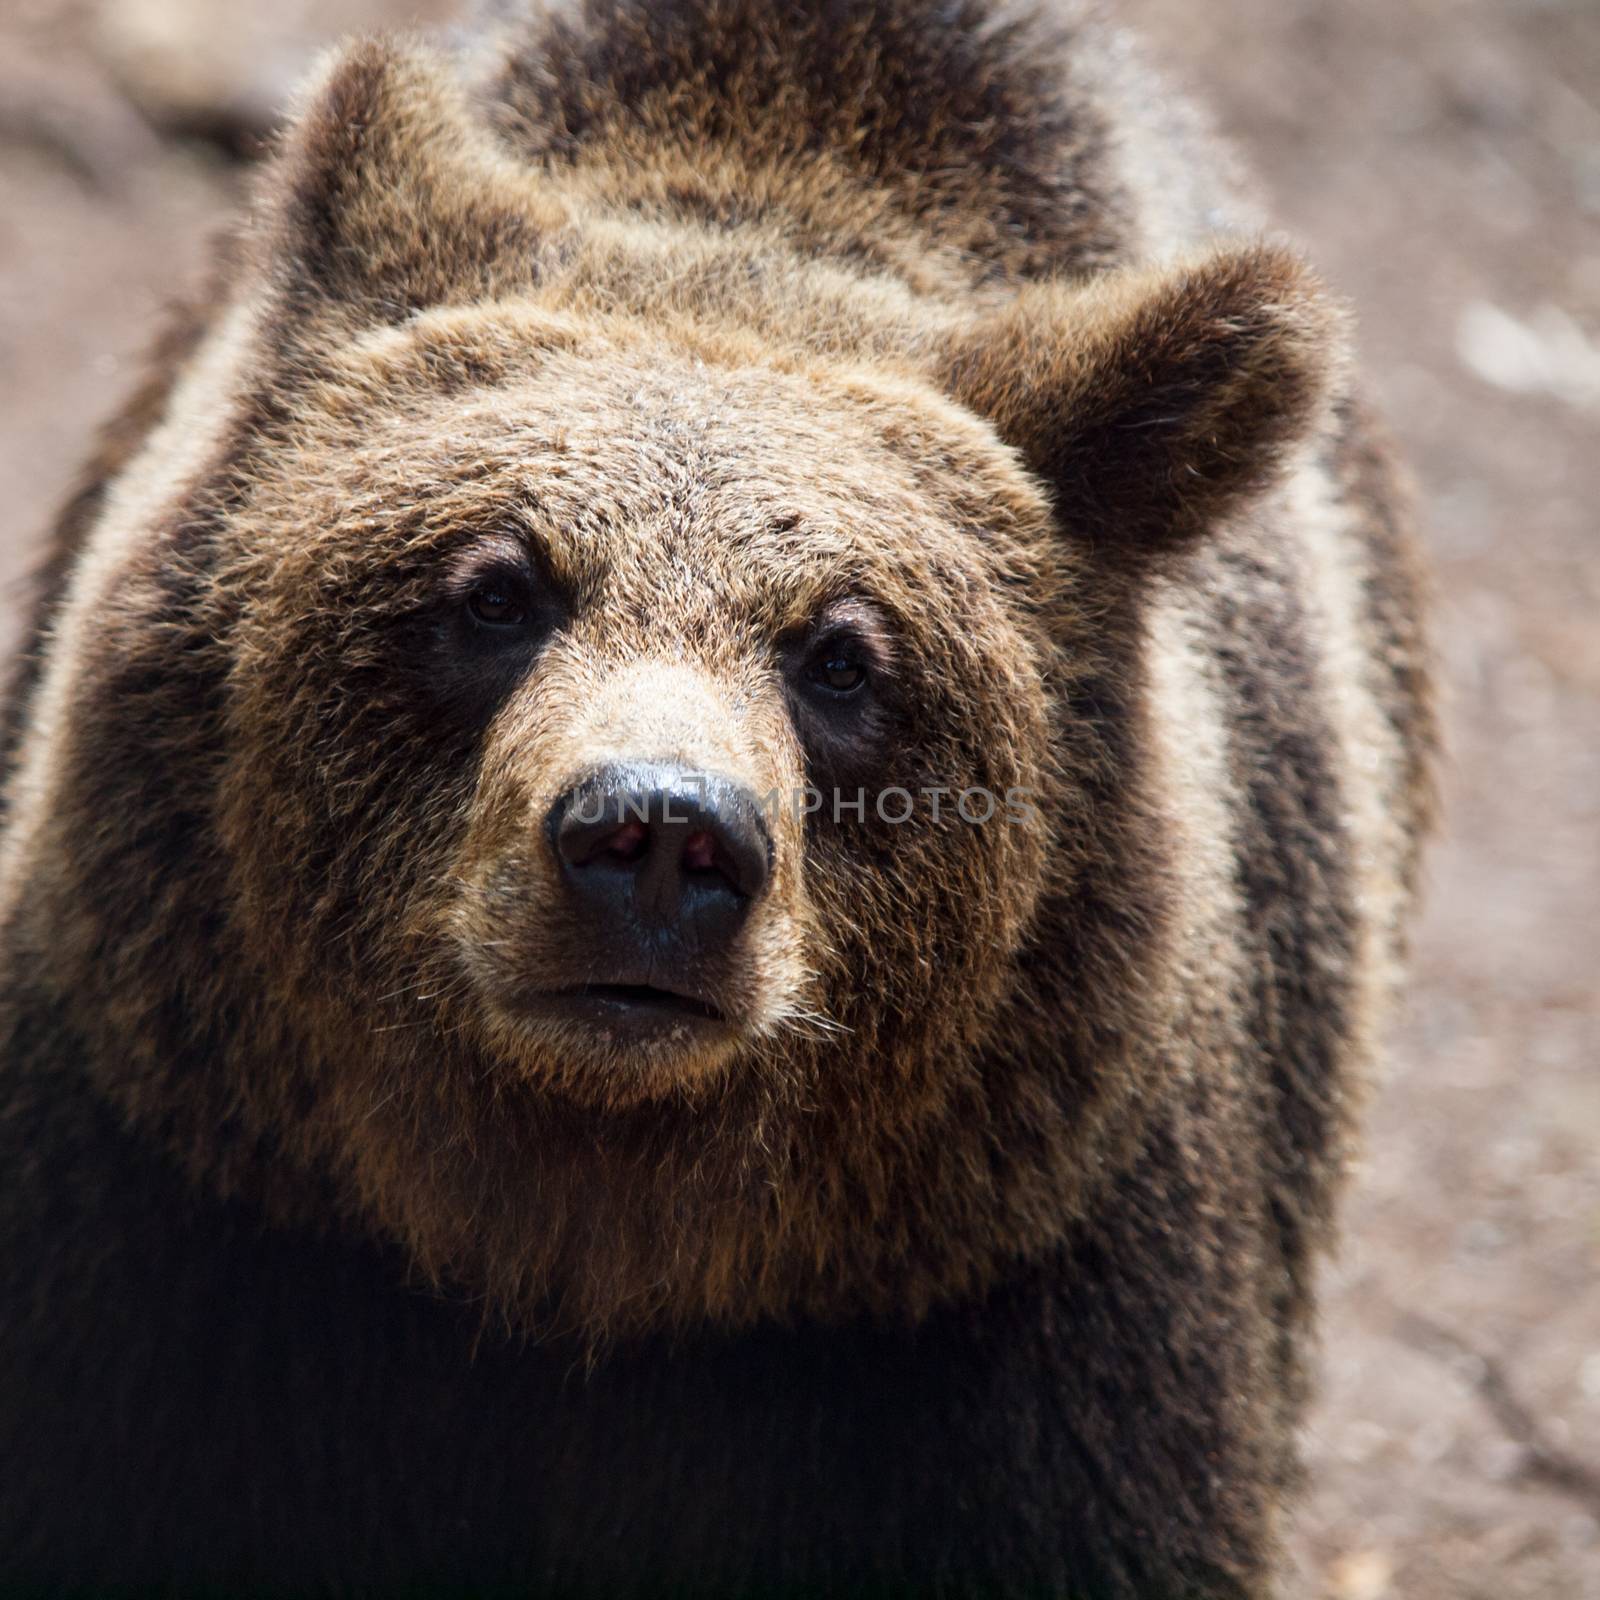 Brown bear. Close-up view.